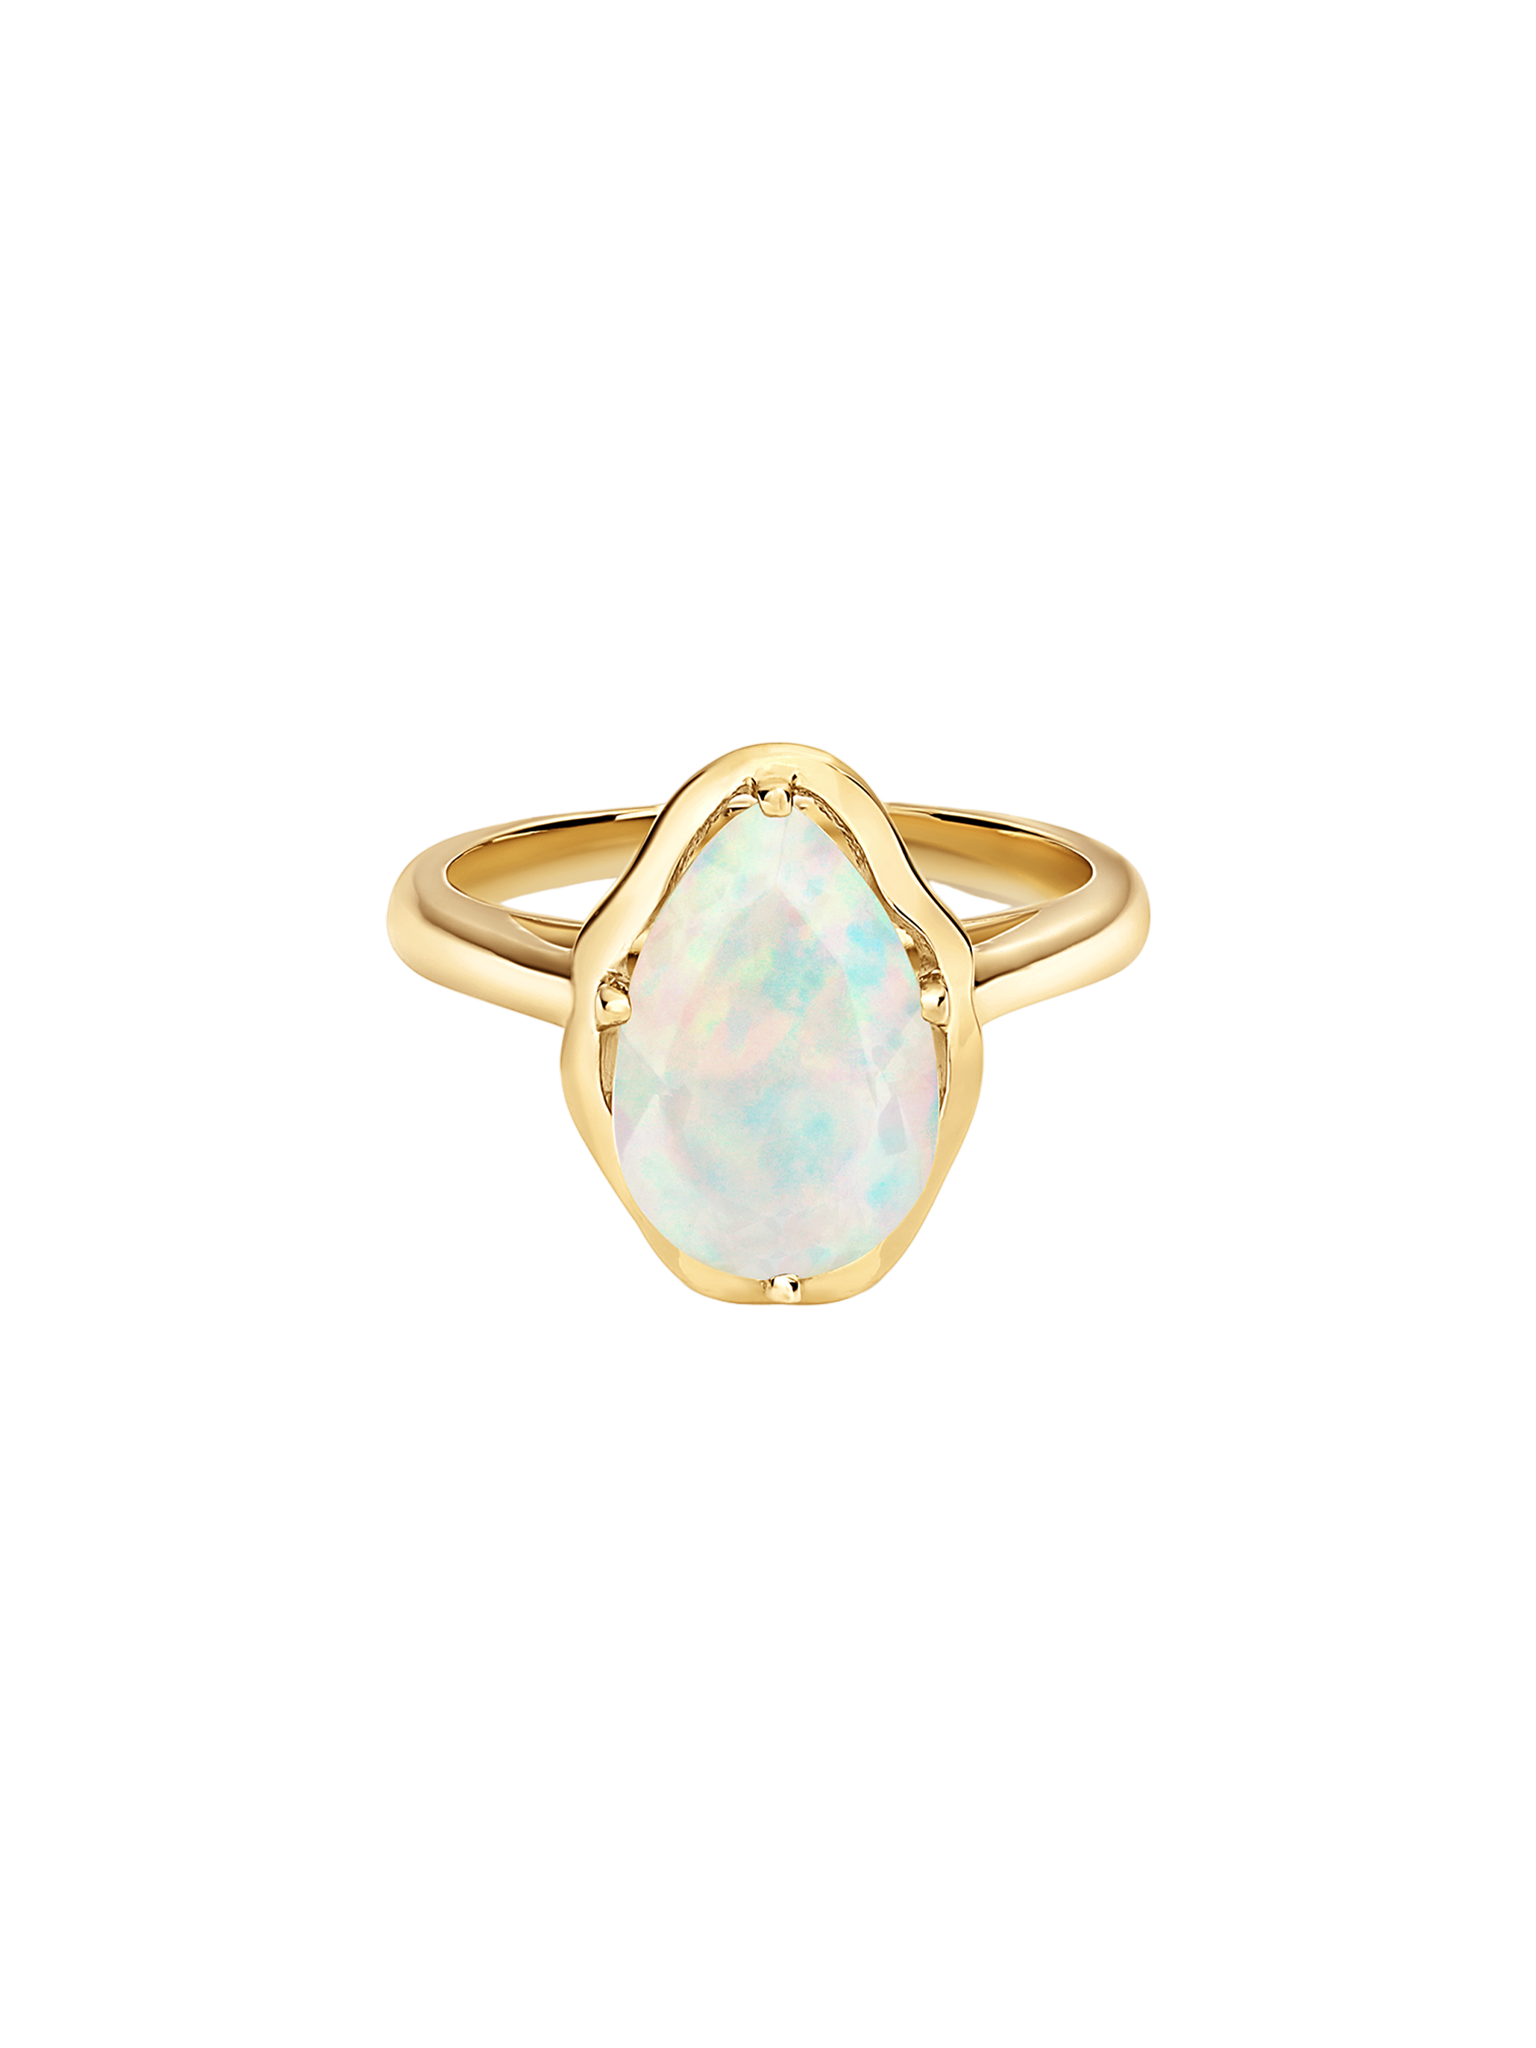 Glow ring ethiopian opal